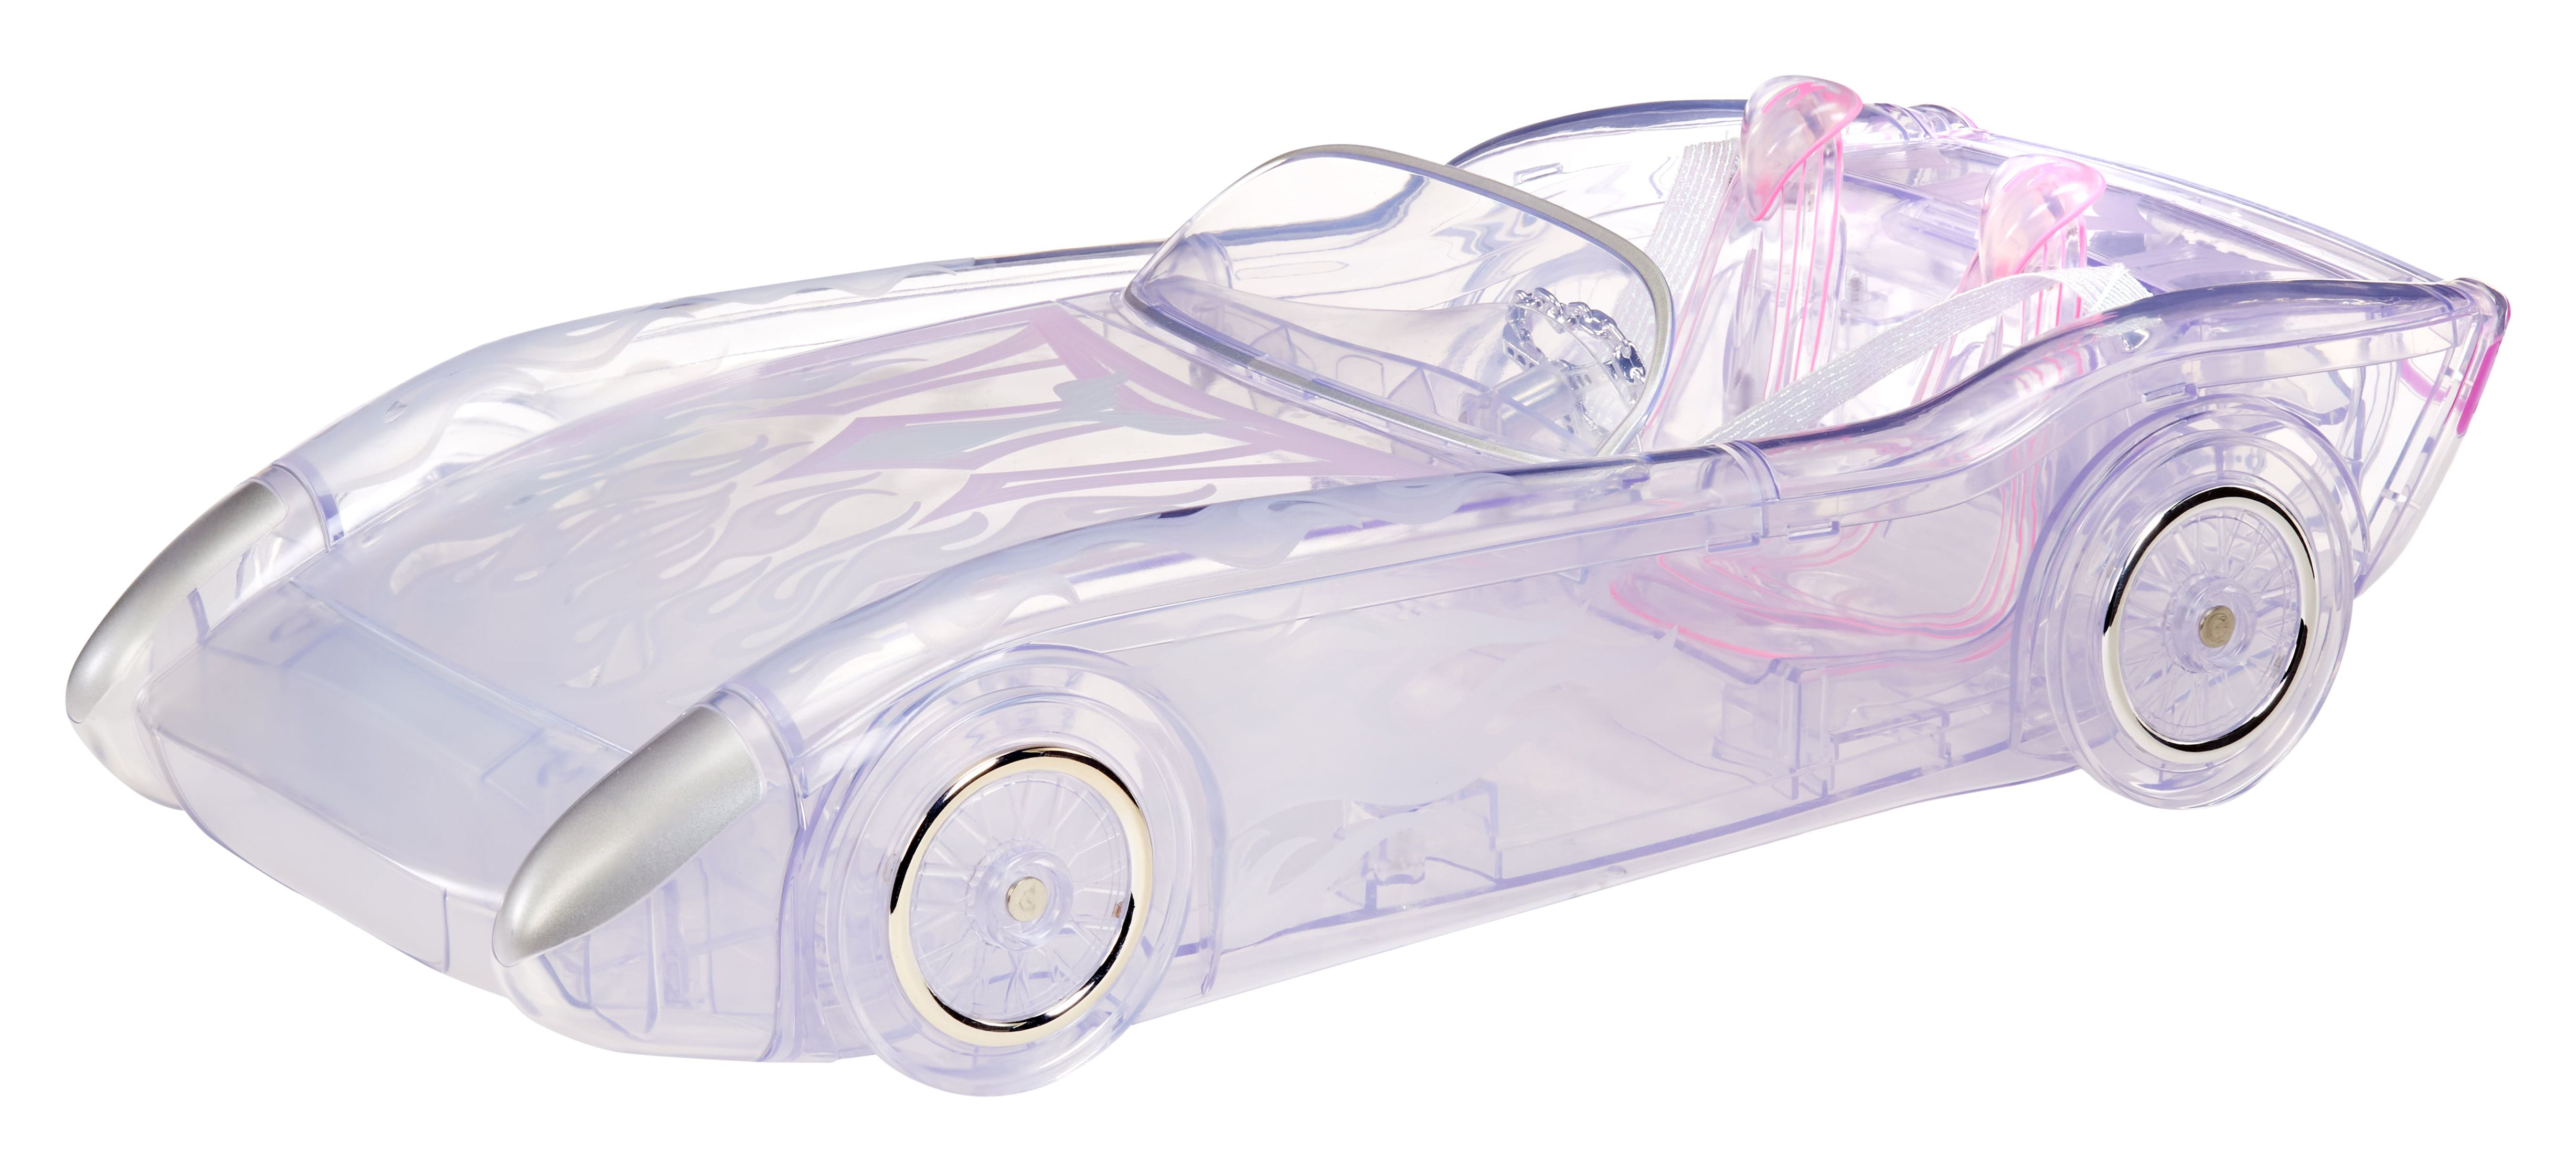 Mermaze Mermaidz™ Ocean Cruiser Convertible Car with Color Change Decals, Glitter-Filled Walls, Rolling Wheels, Working Seat Belts, Steering Wheel, Fits 2 Dolls - image 4 of 9